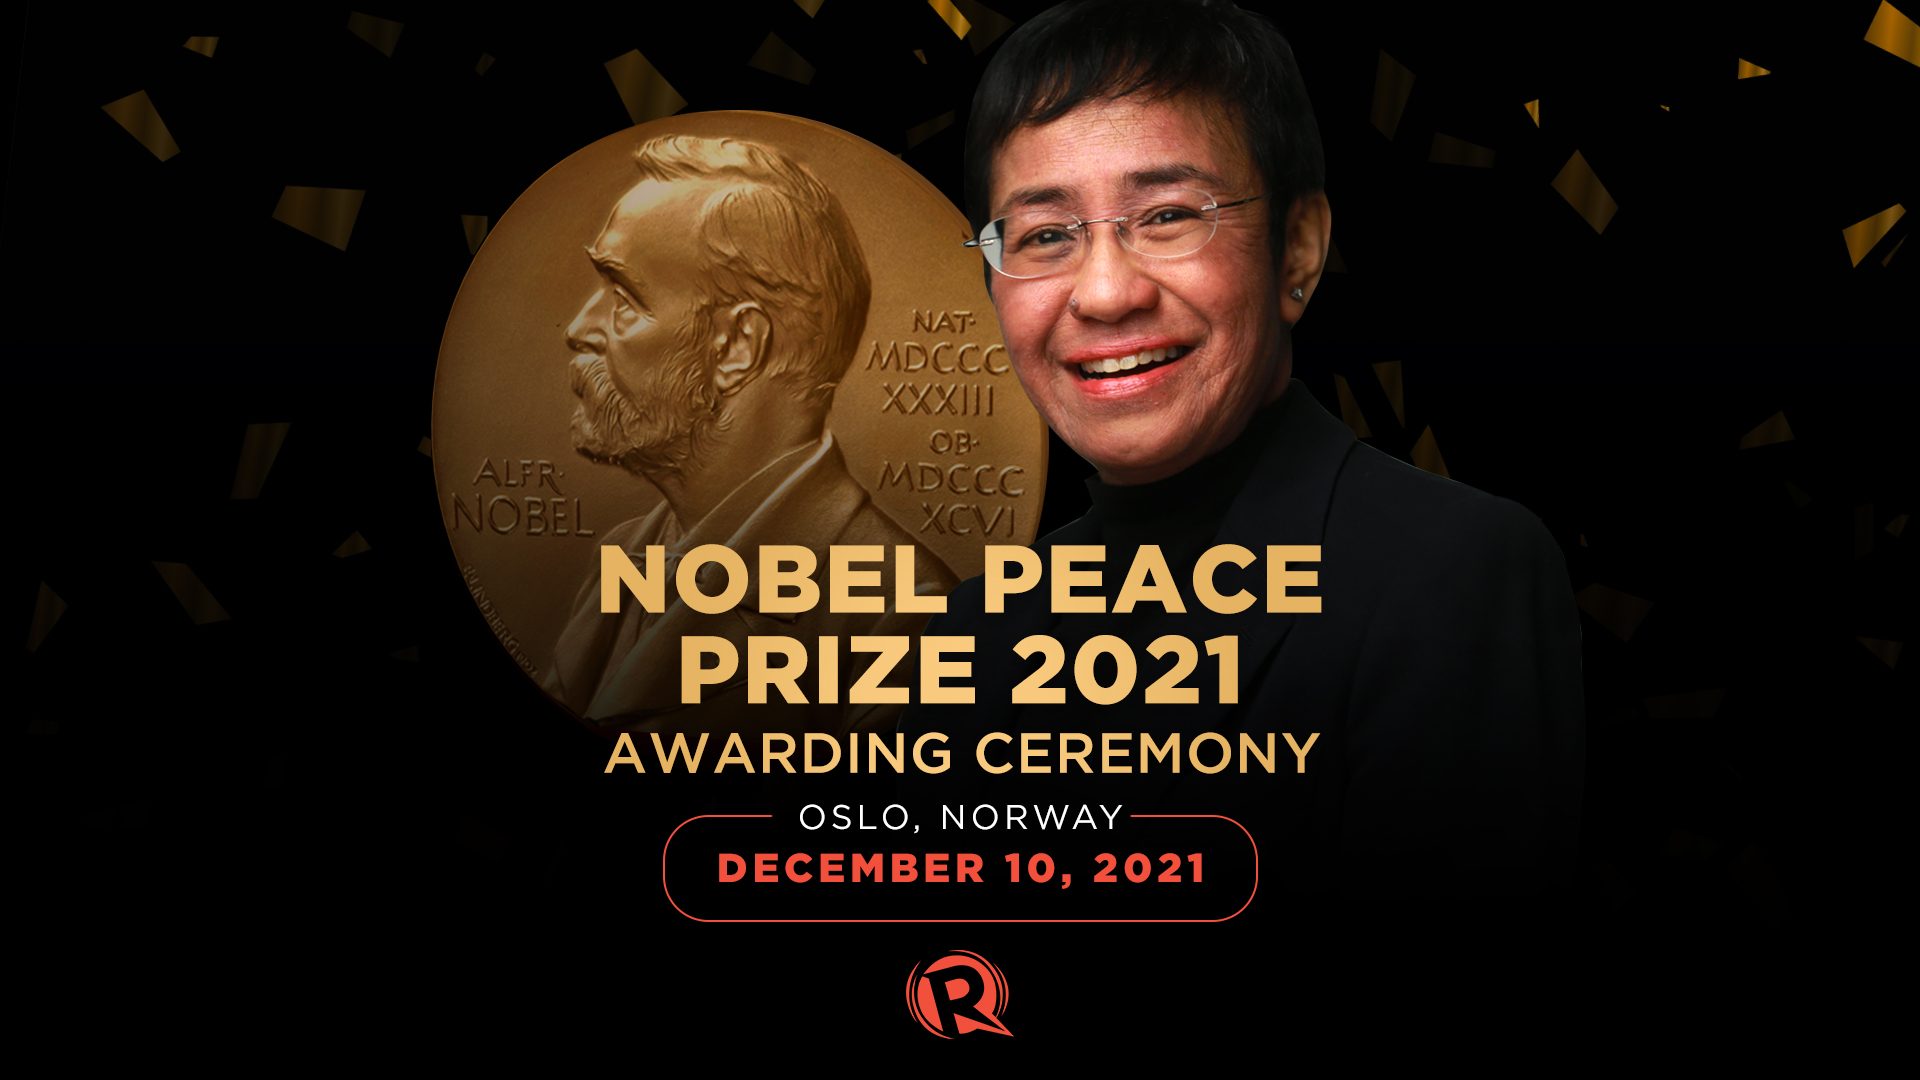 LIVE UPDATES: Awarding of Nobel Peace Prize to Maria Ressa